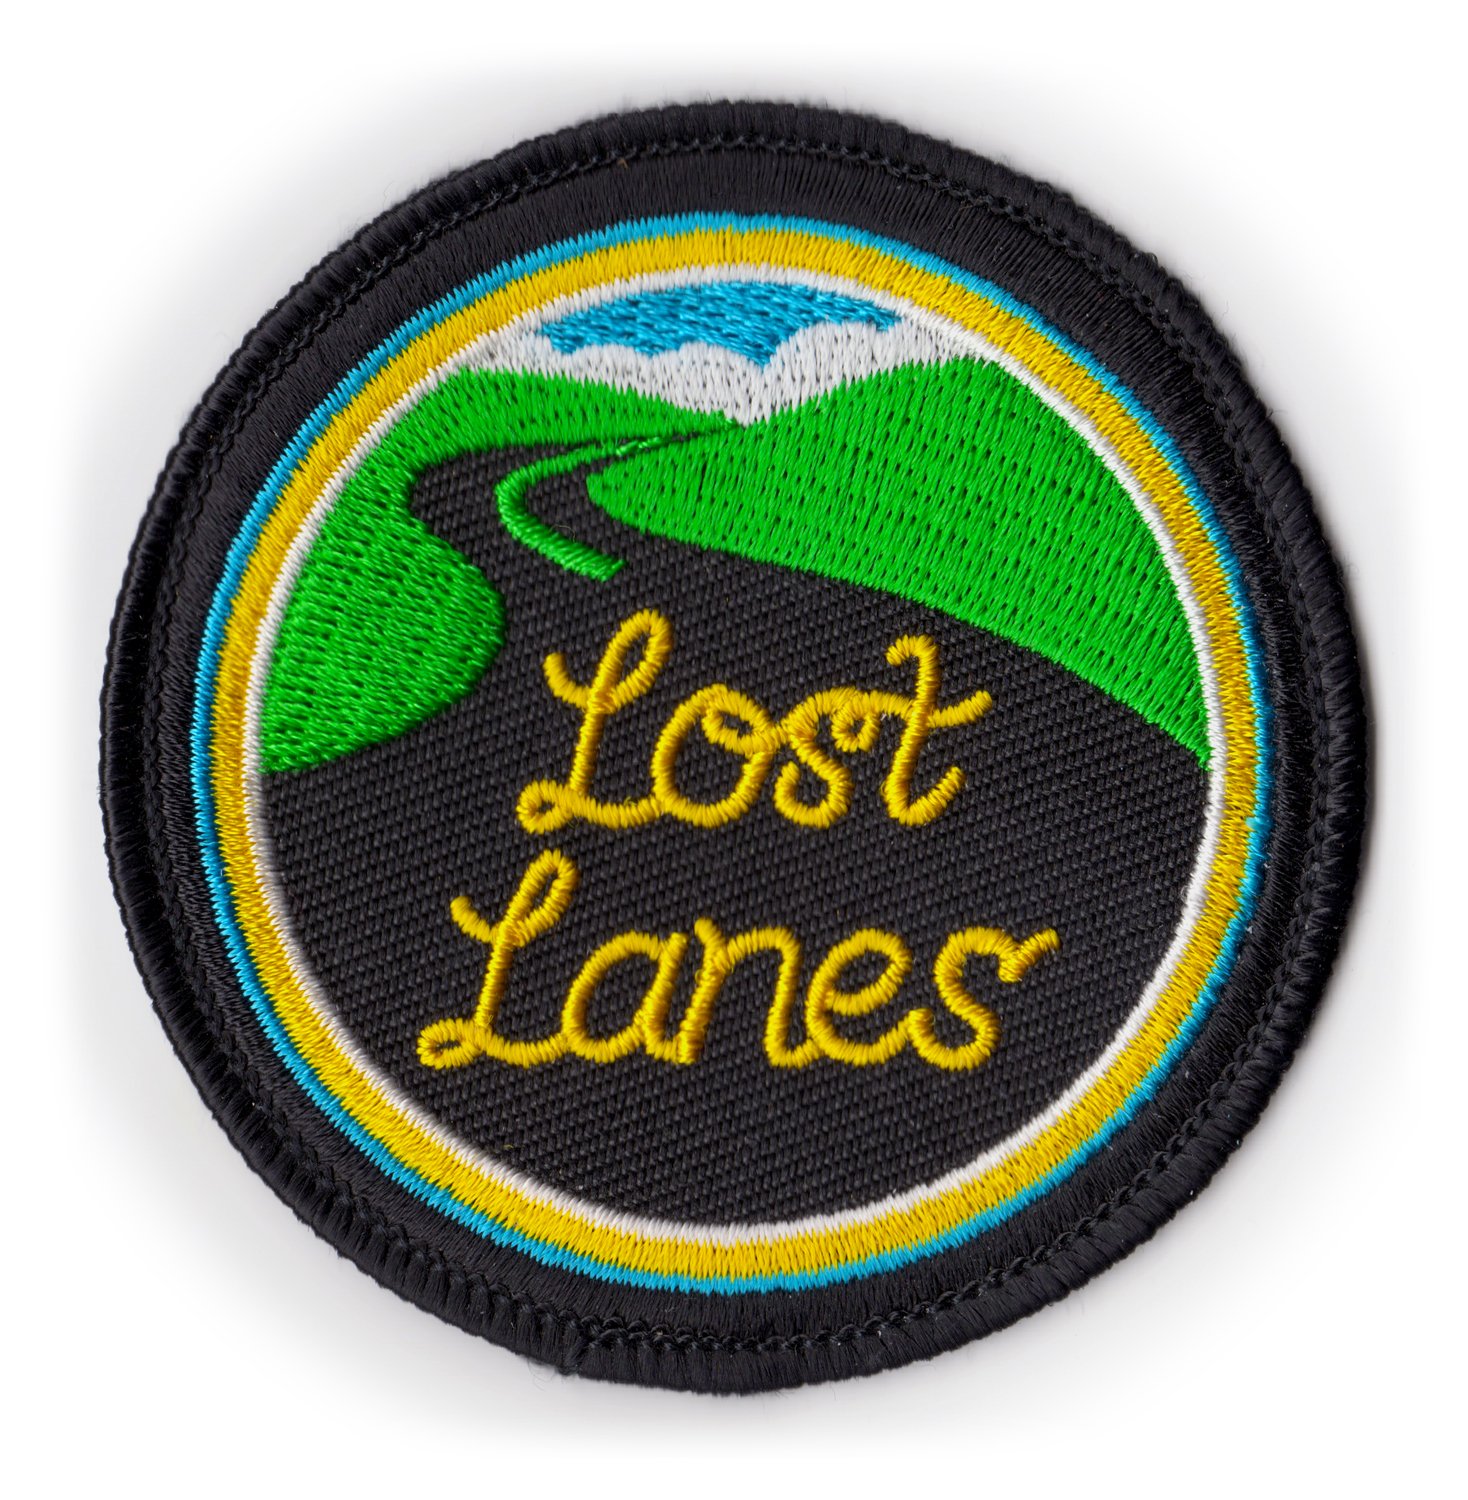 Original Lost Lanes cloth patch